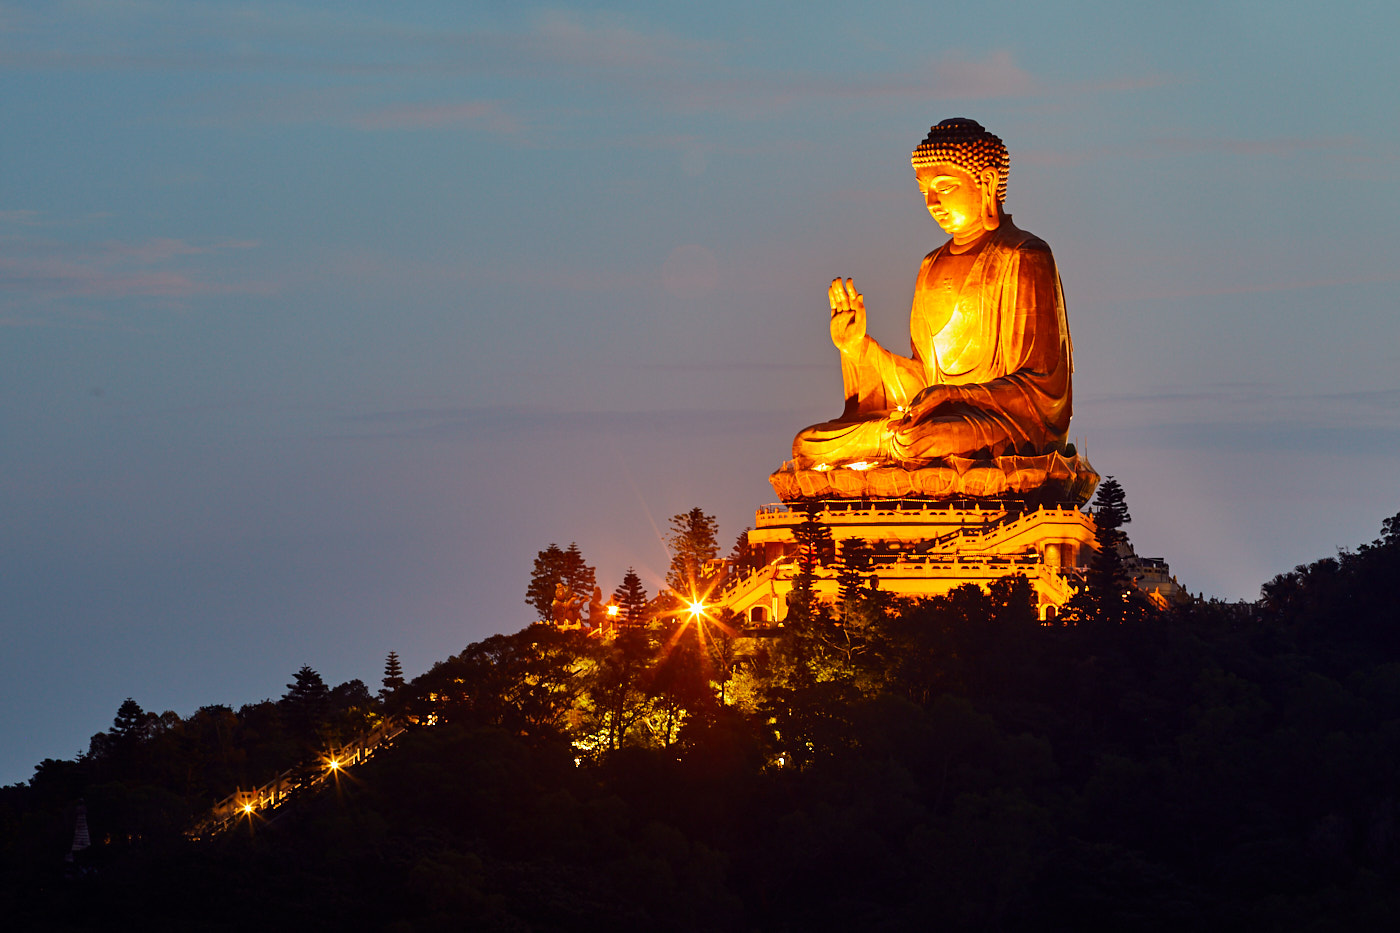 Hiking the Big Buddha and wisdom path